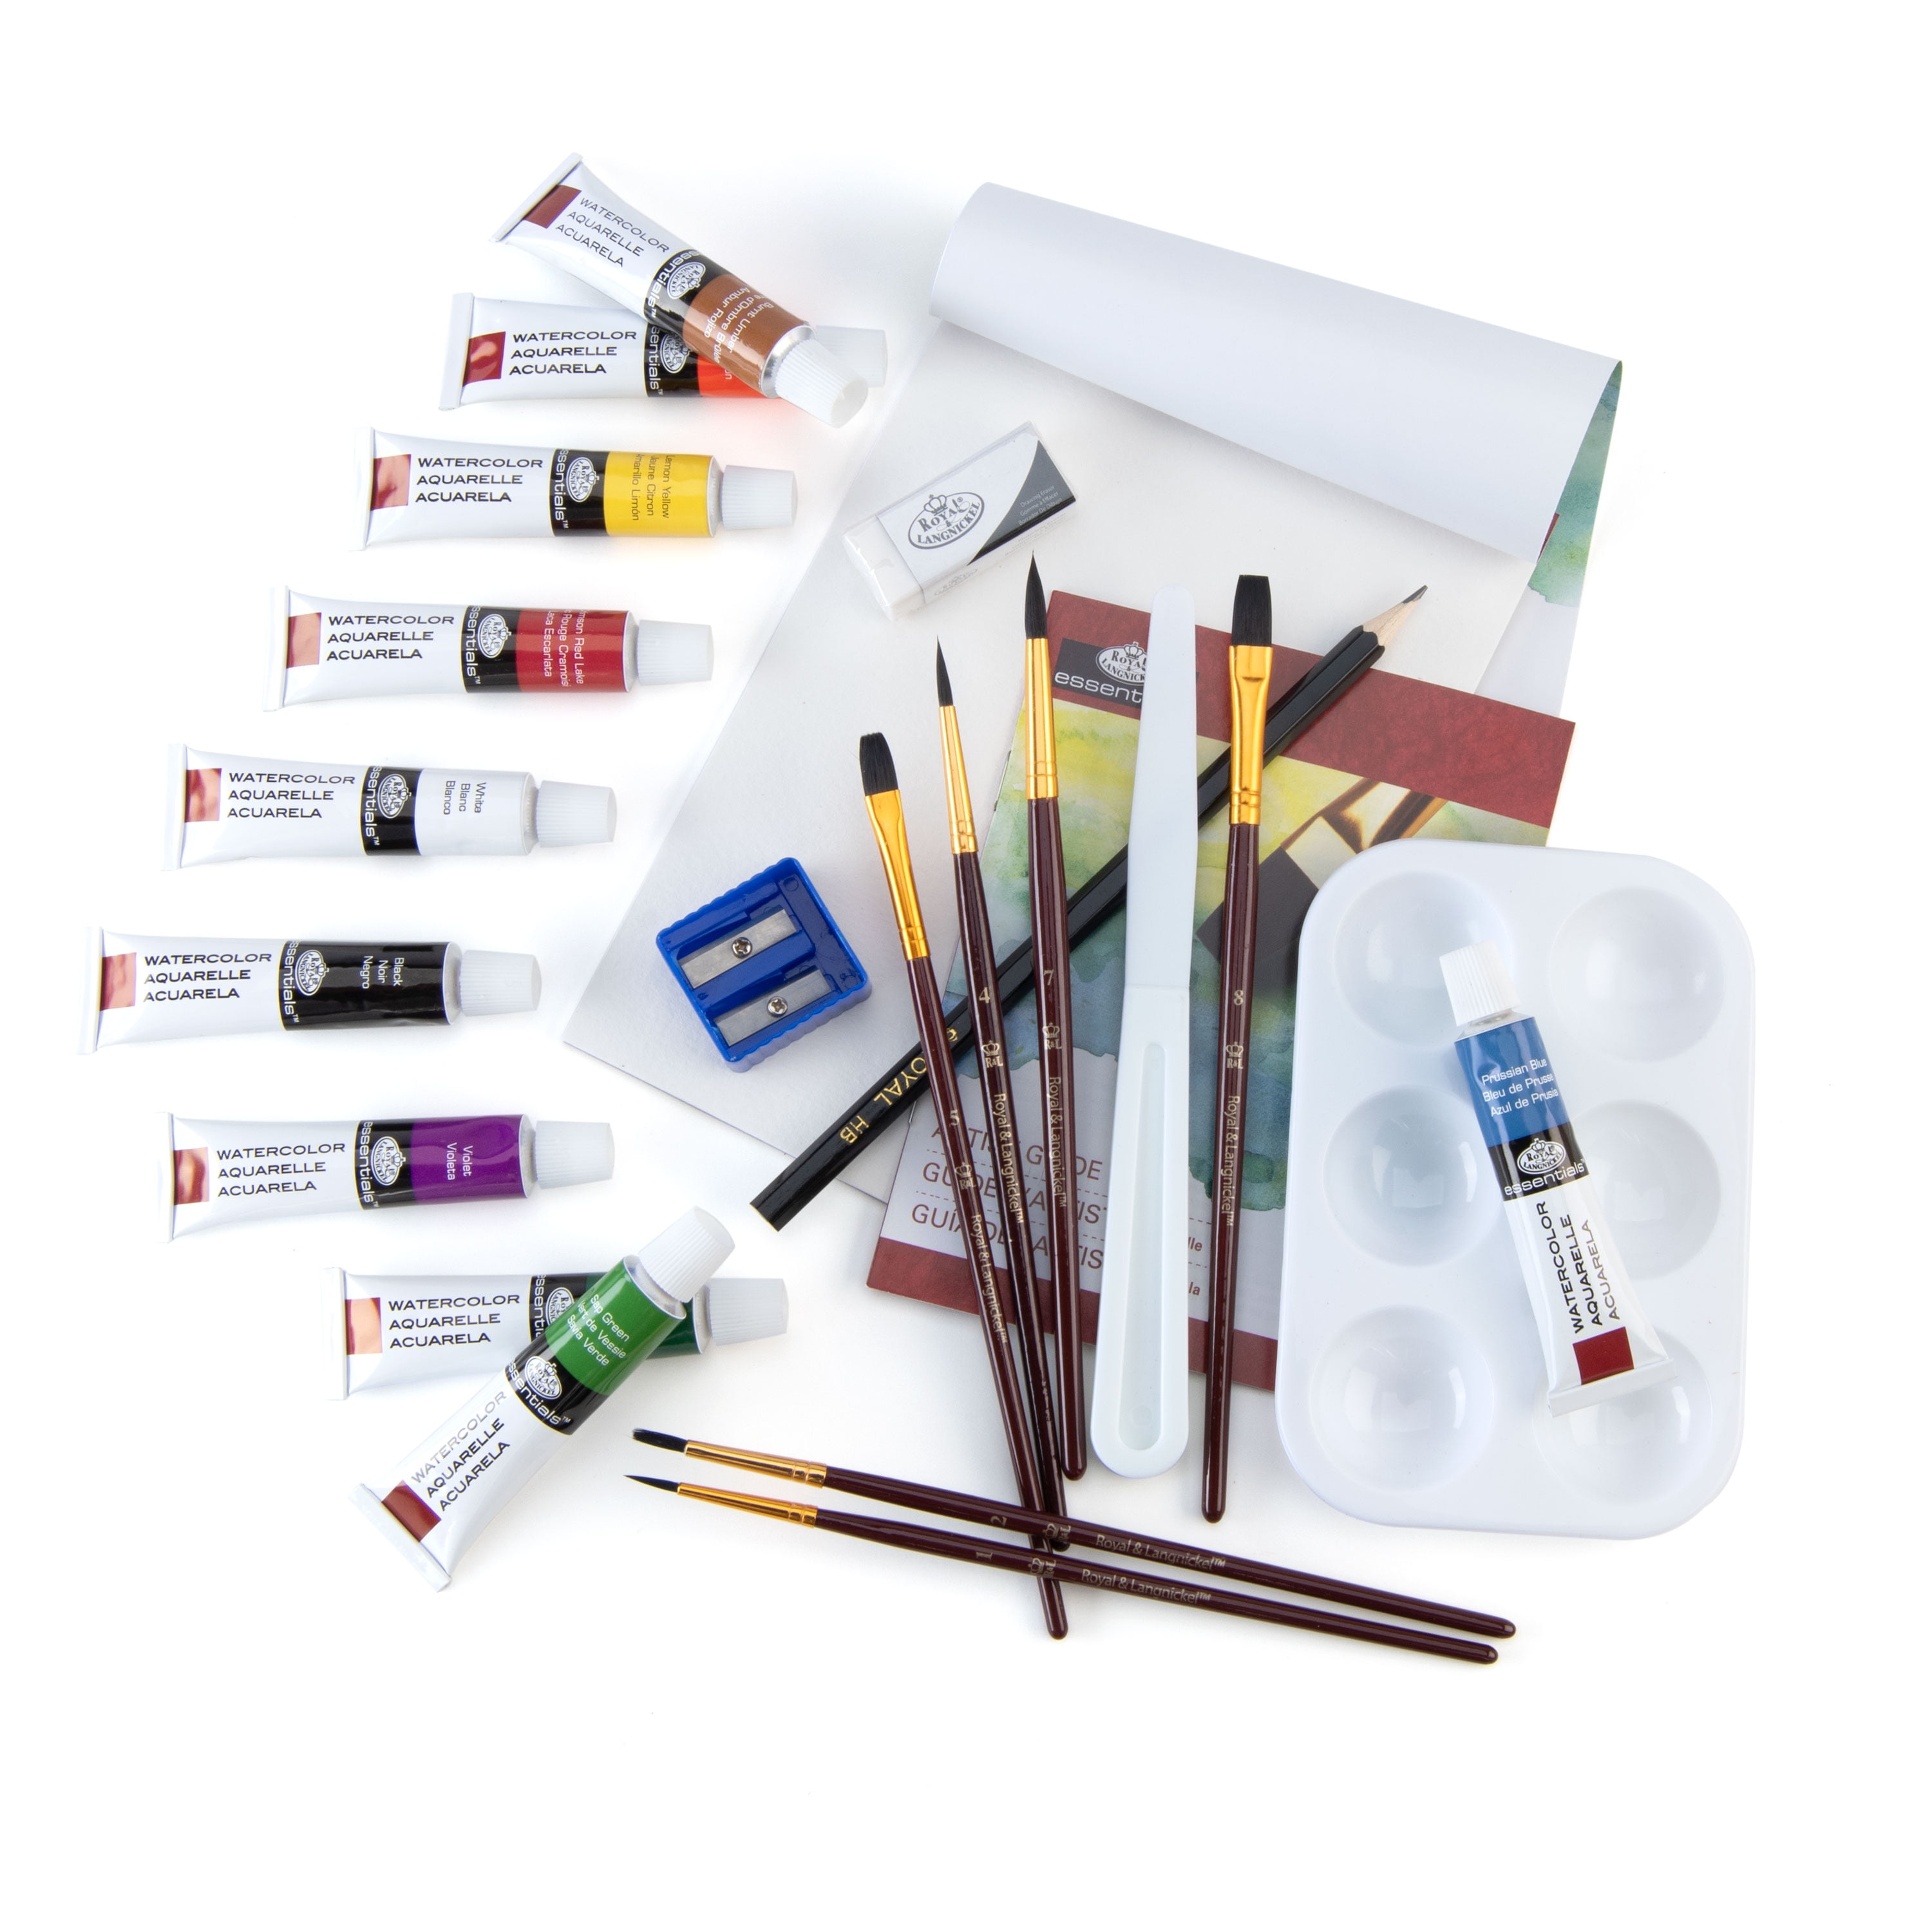 Royal & Langnickel 19pc Essentials Watercolor Artist Colors Flipkit Travel Set